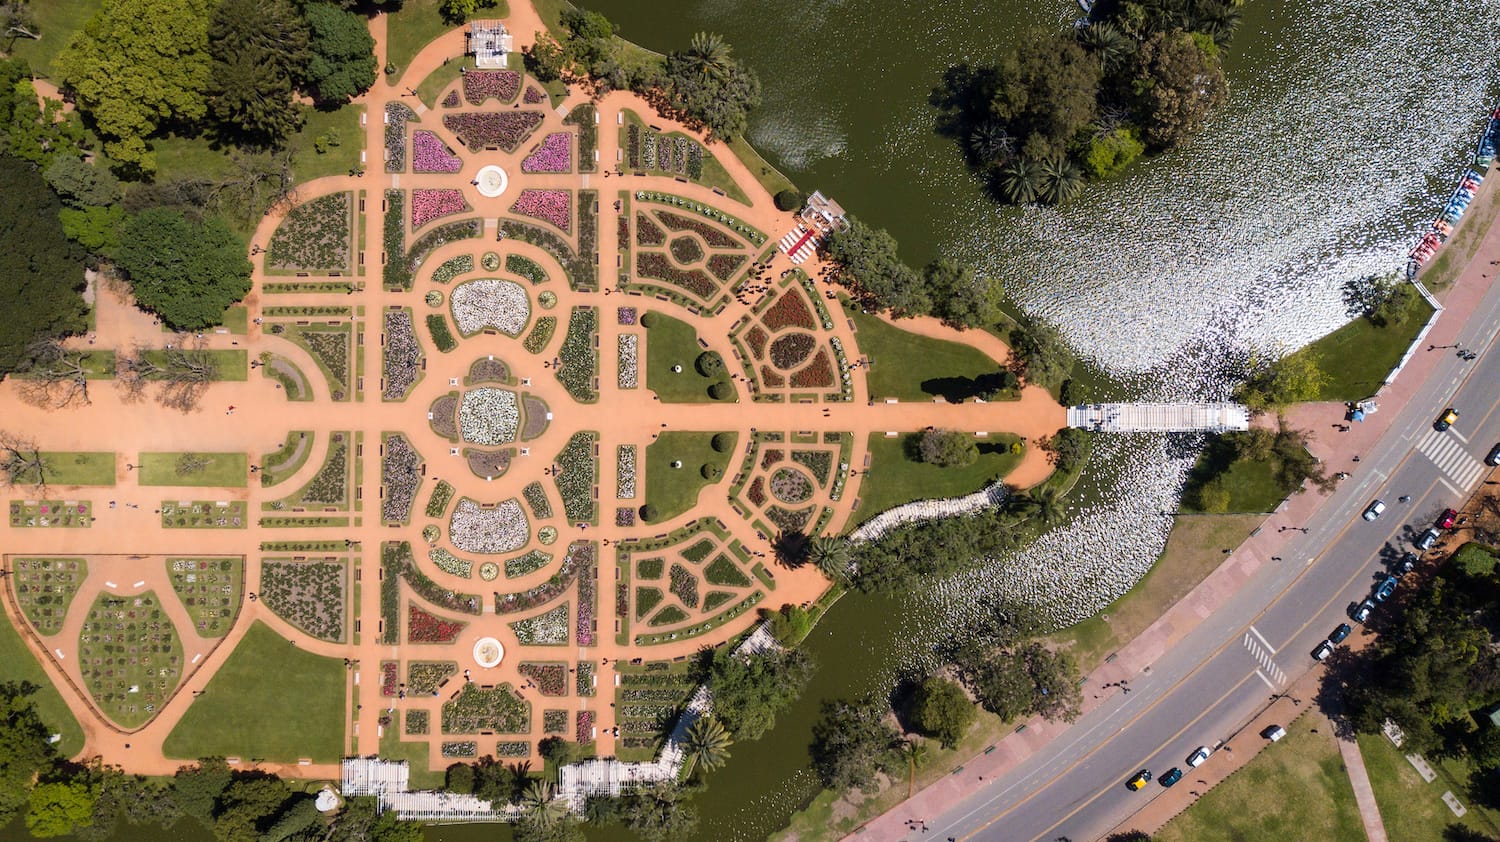 The Rose Garden - El Rosedal Secrets of Buenos Aires